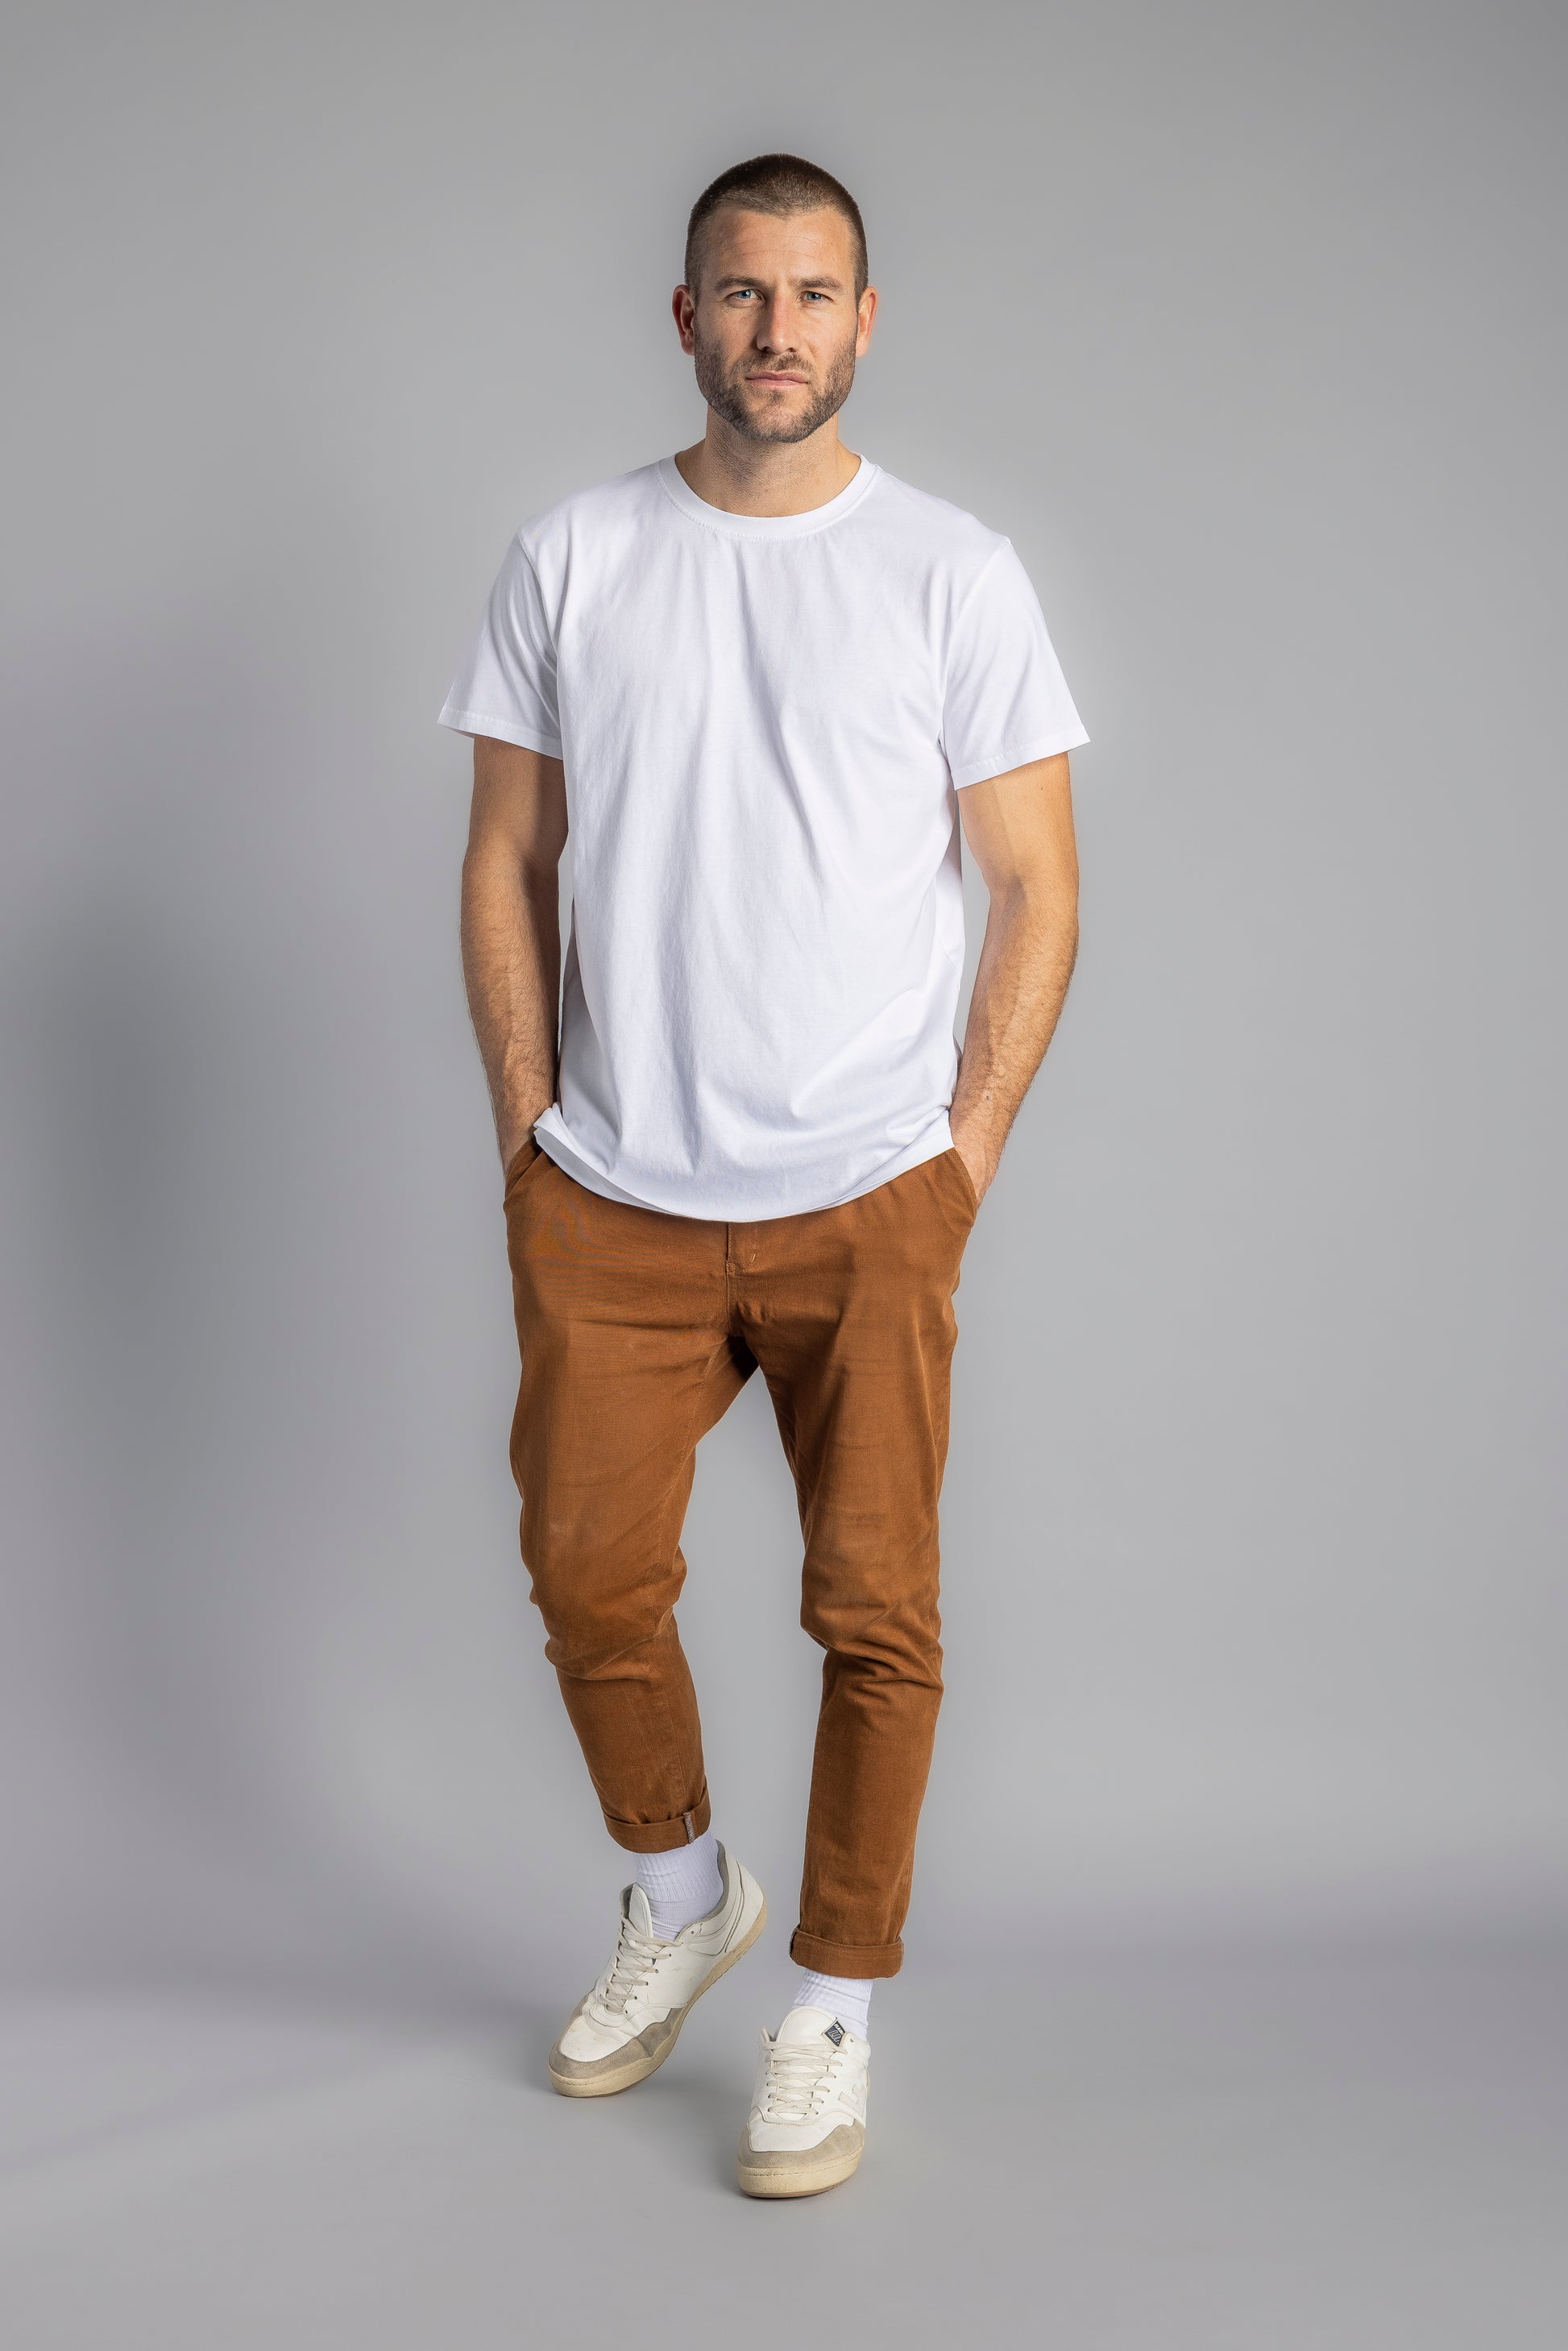 DIRTS – Blank STANDARD, Premium White T-Shirt